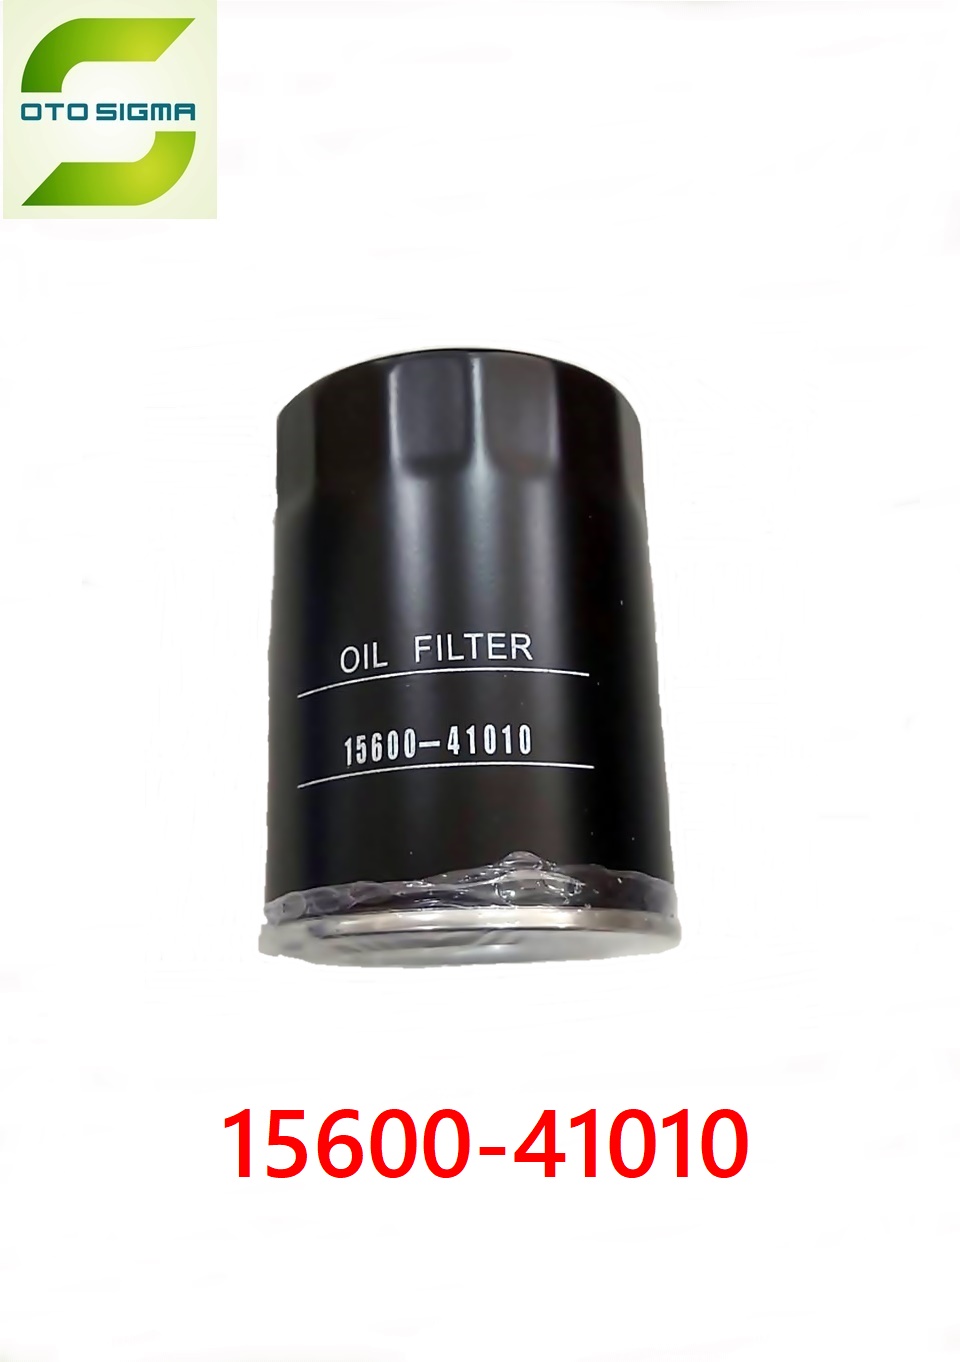  Oil Filter 15600-41010